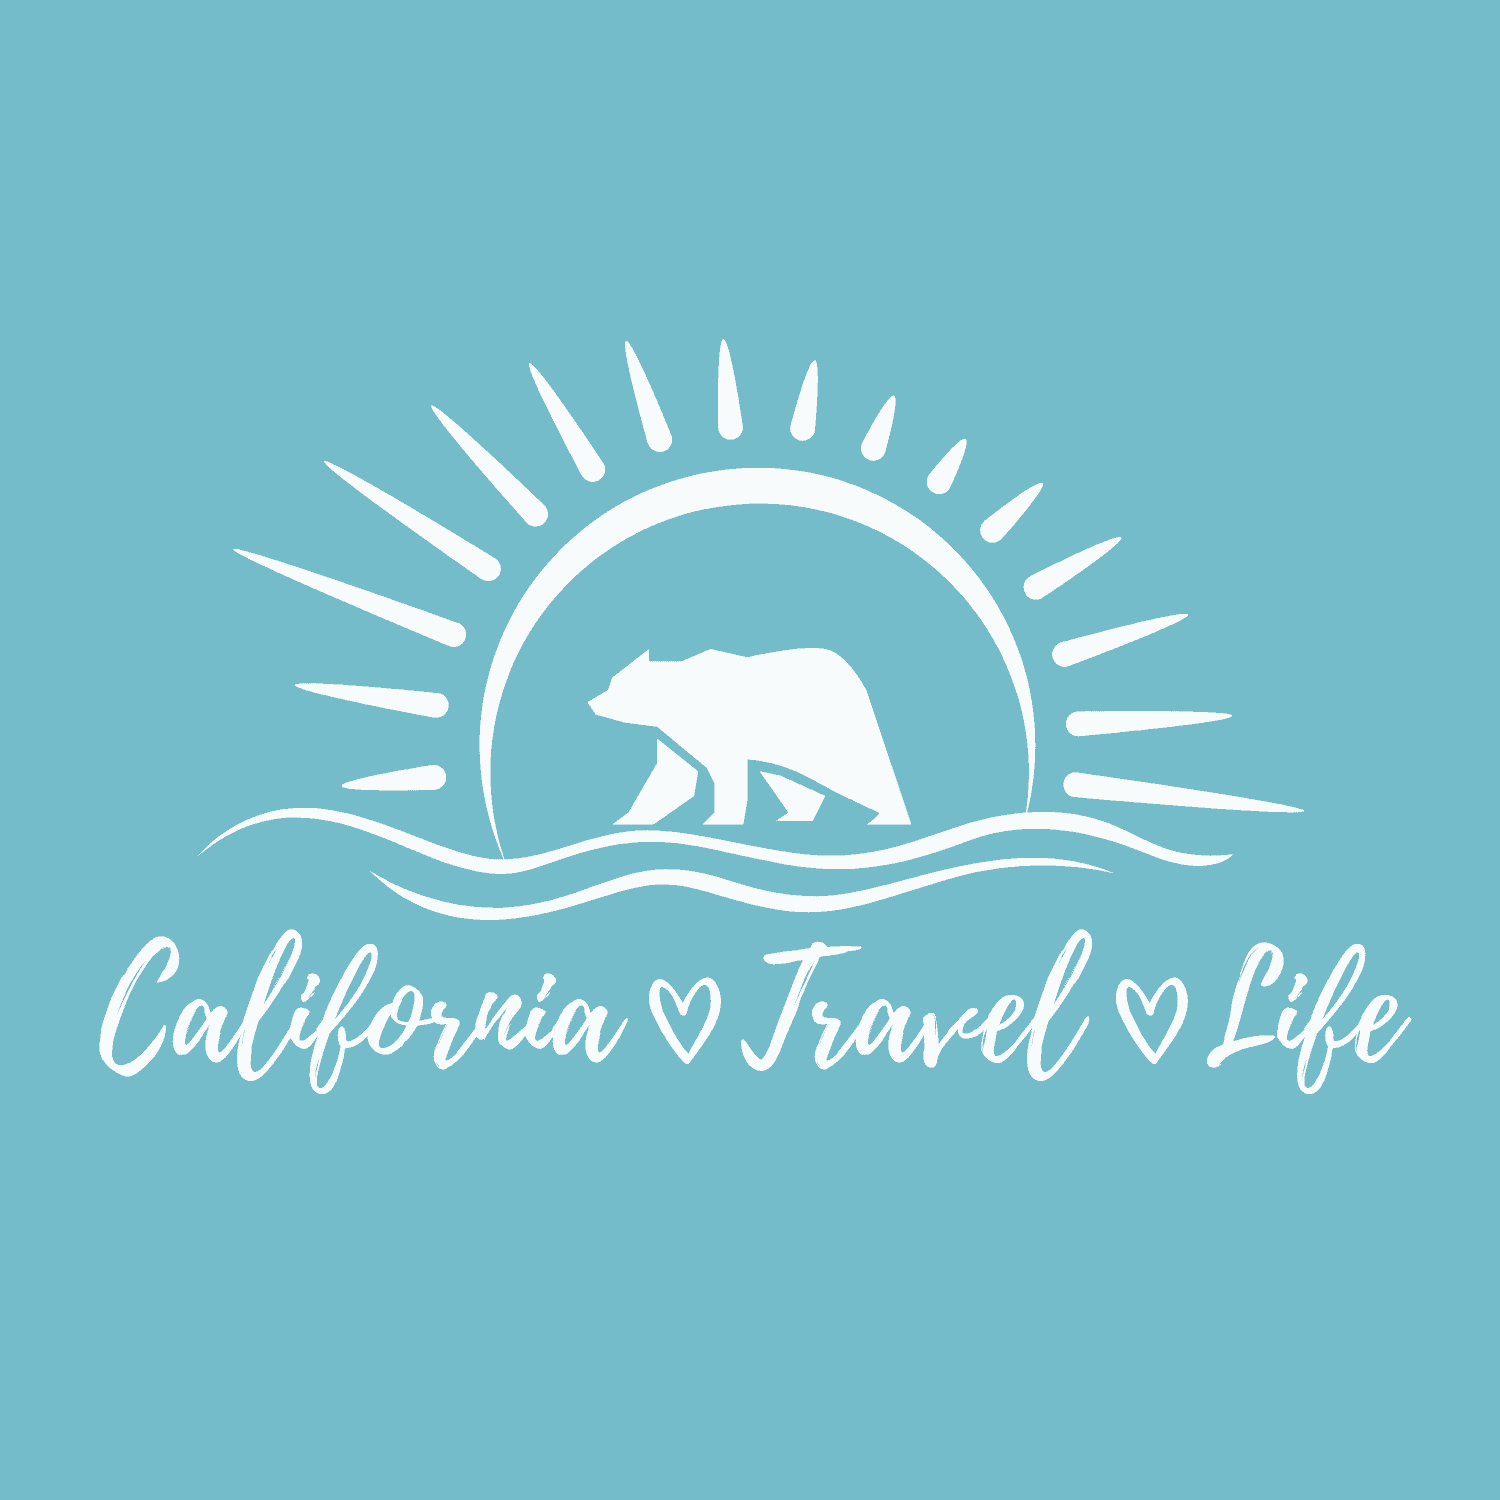 California Travel Life